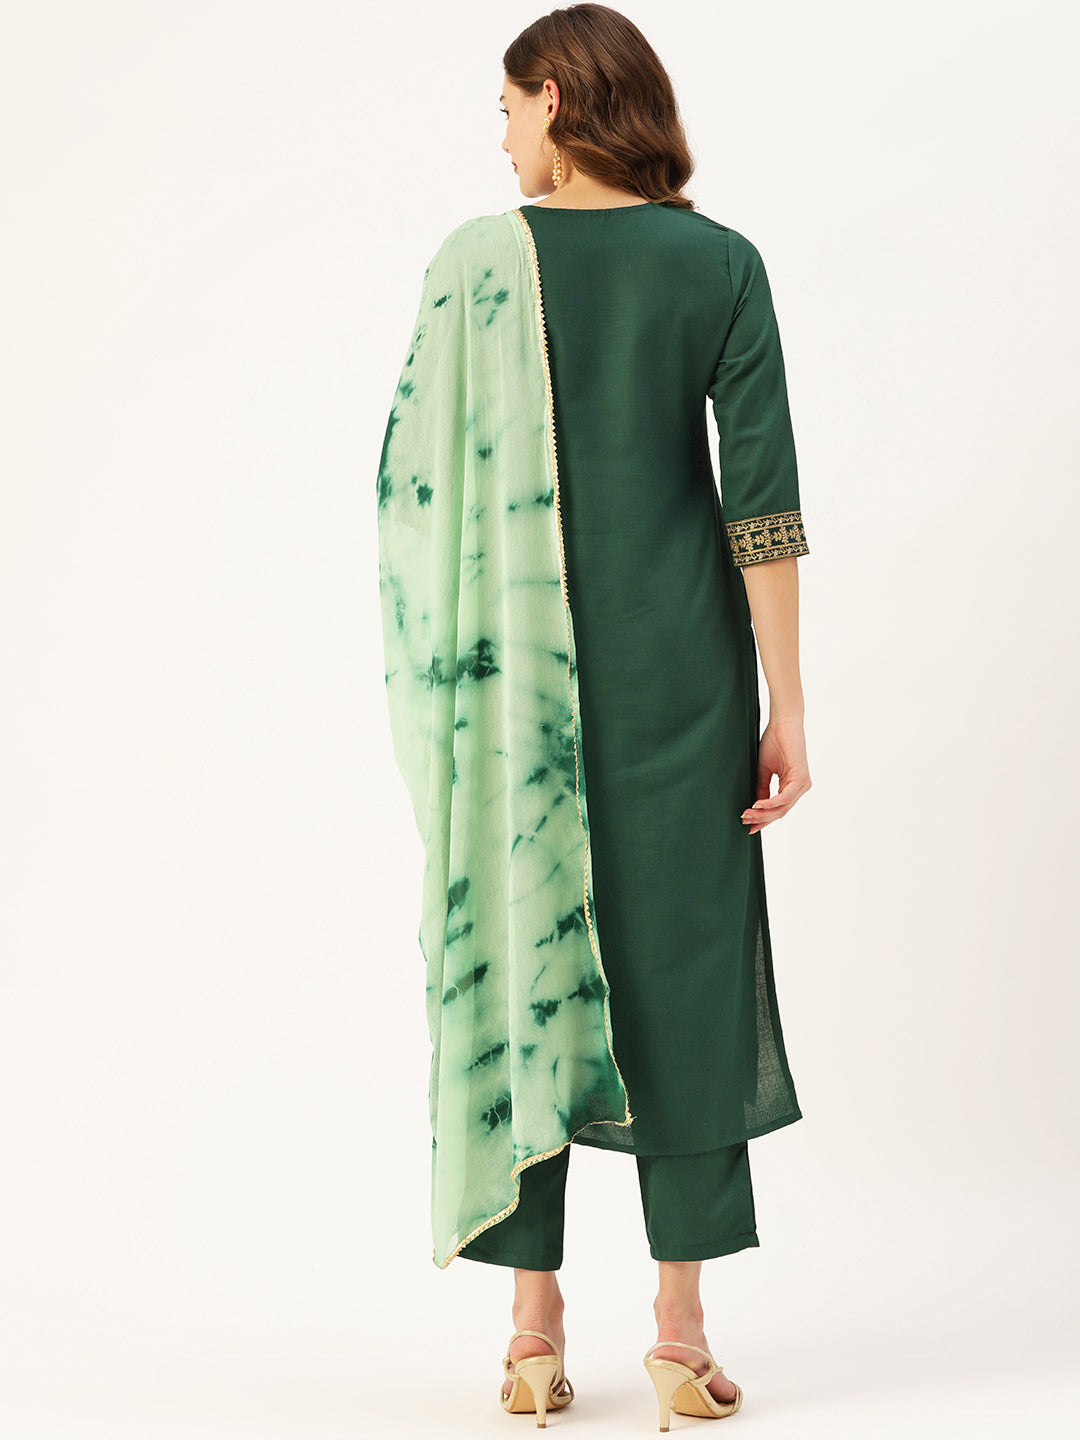 Women's Green Cotton Blend Panelled Printed Straight Kurta Trouser Set With Dupatta - Vaaba